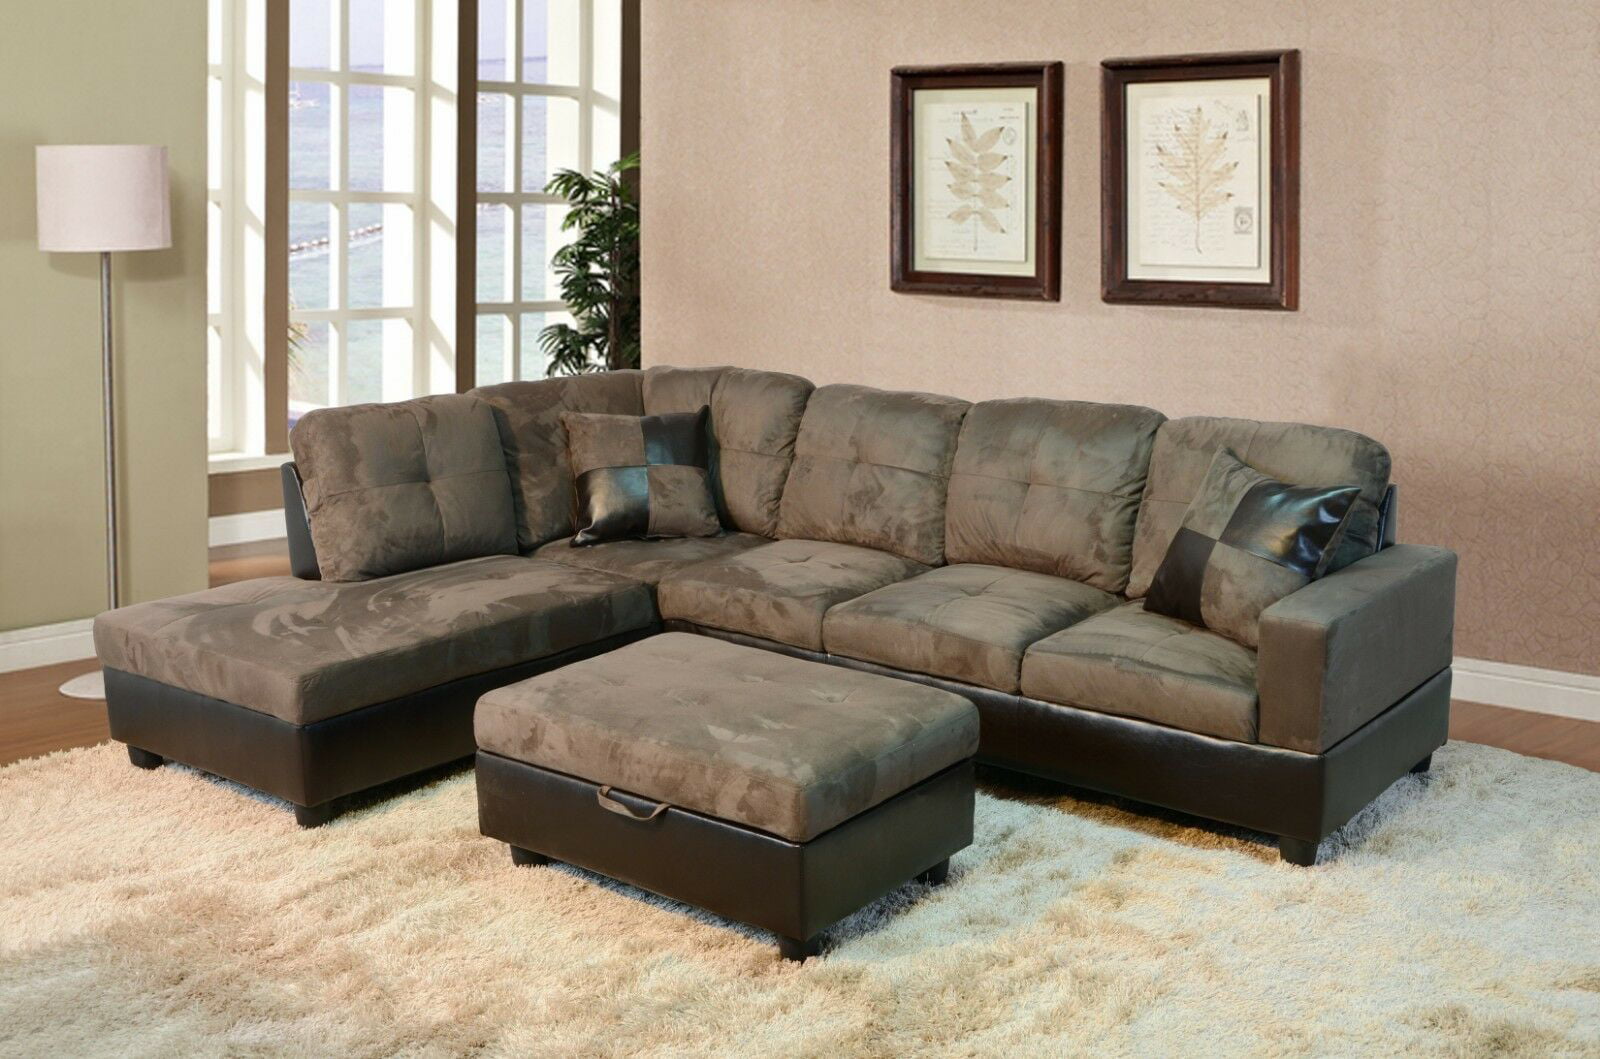 Ainehome 3 PCS Living Room Set, Sectional Sofa Set